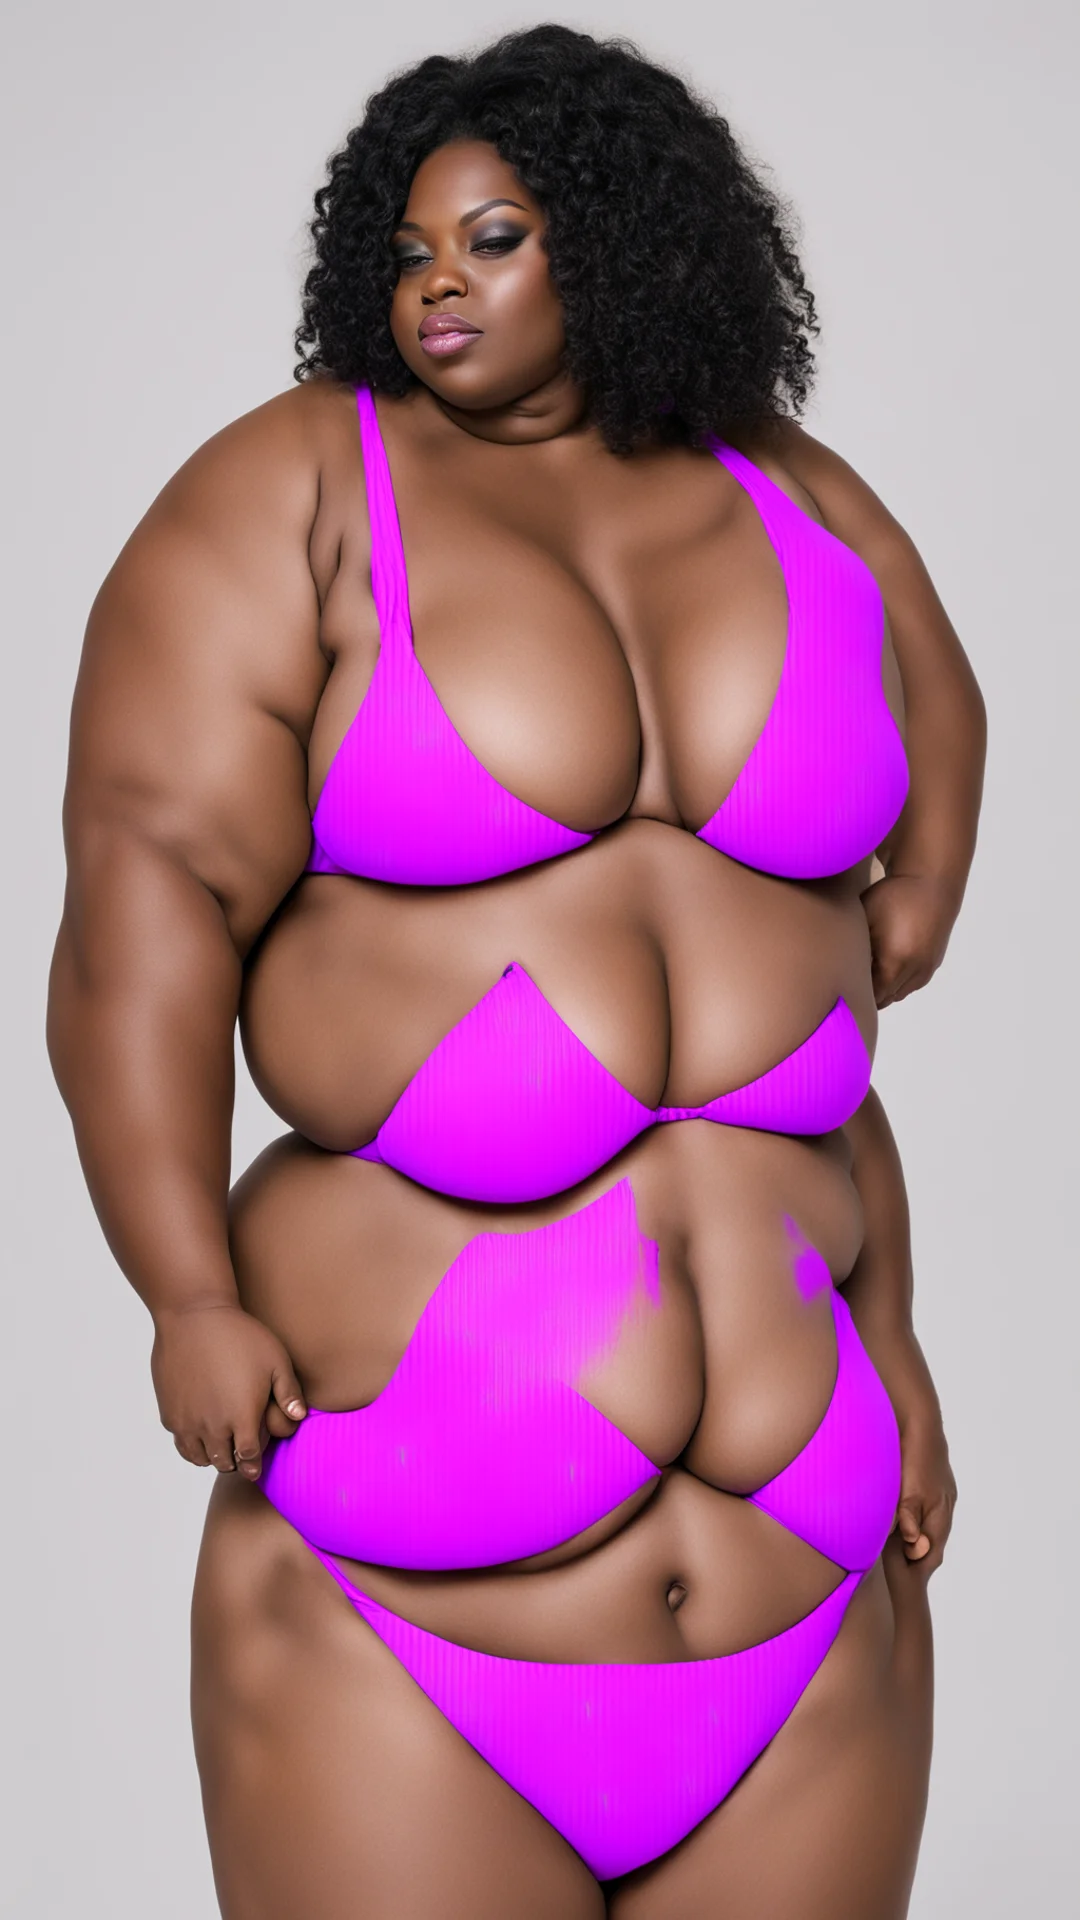 very fat ebony shemale wearing a purple bikini confident engaging wow artstation art 3 tall